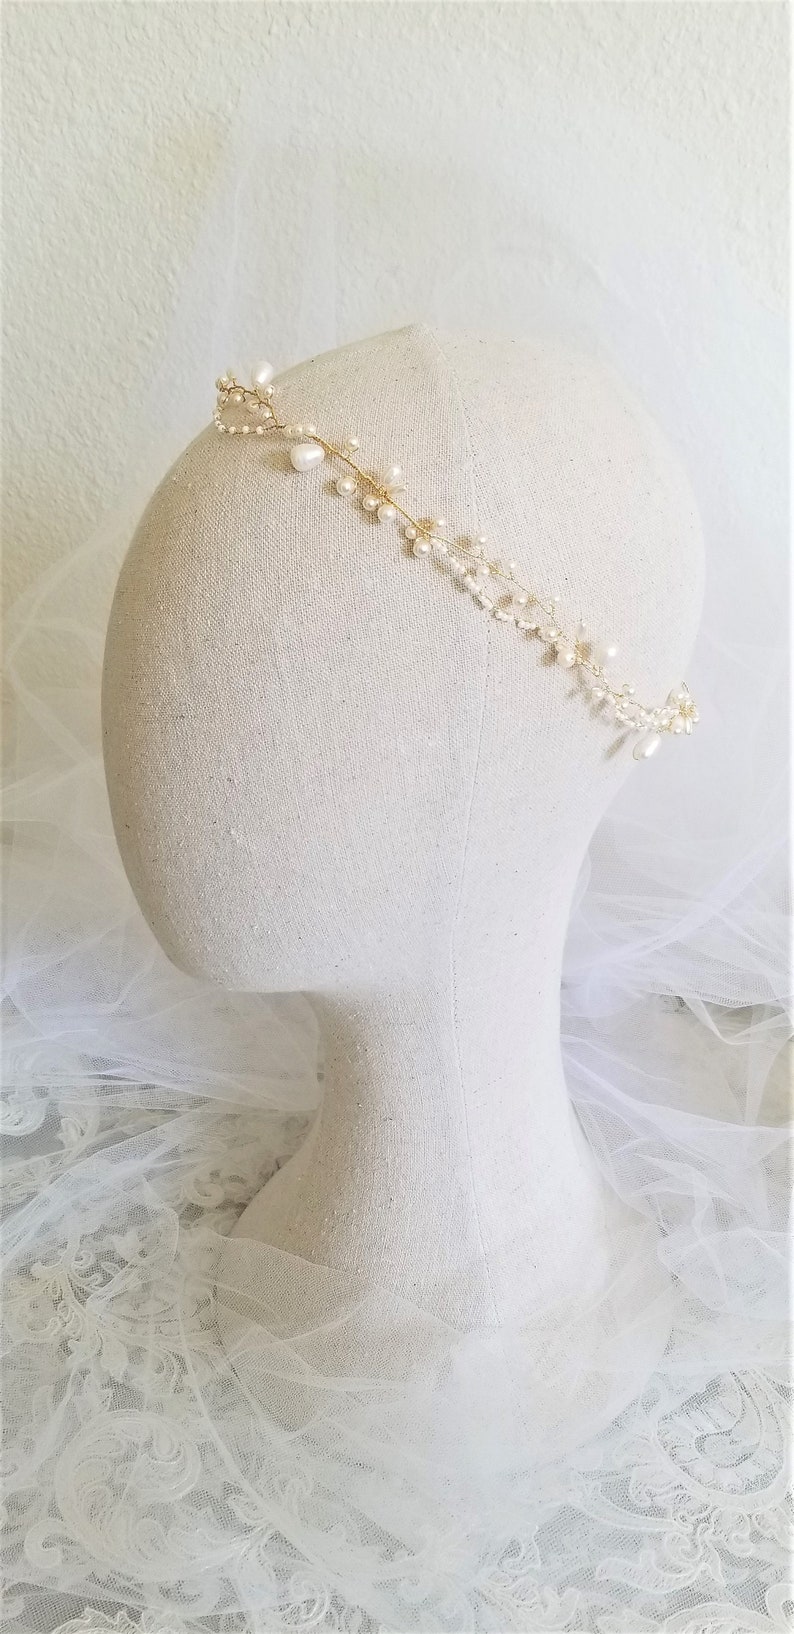 Bridal Freshwater Pearl Hair Vine. Gold or Silver Delicate Wedding Leaf Wreath, Halo. Minimalist Bride Headpiece, Tiara Crown Headband. JUNE image 7